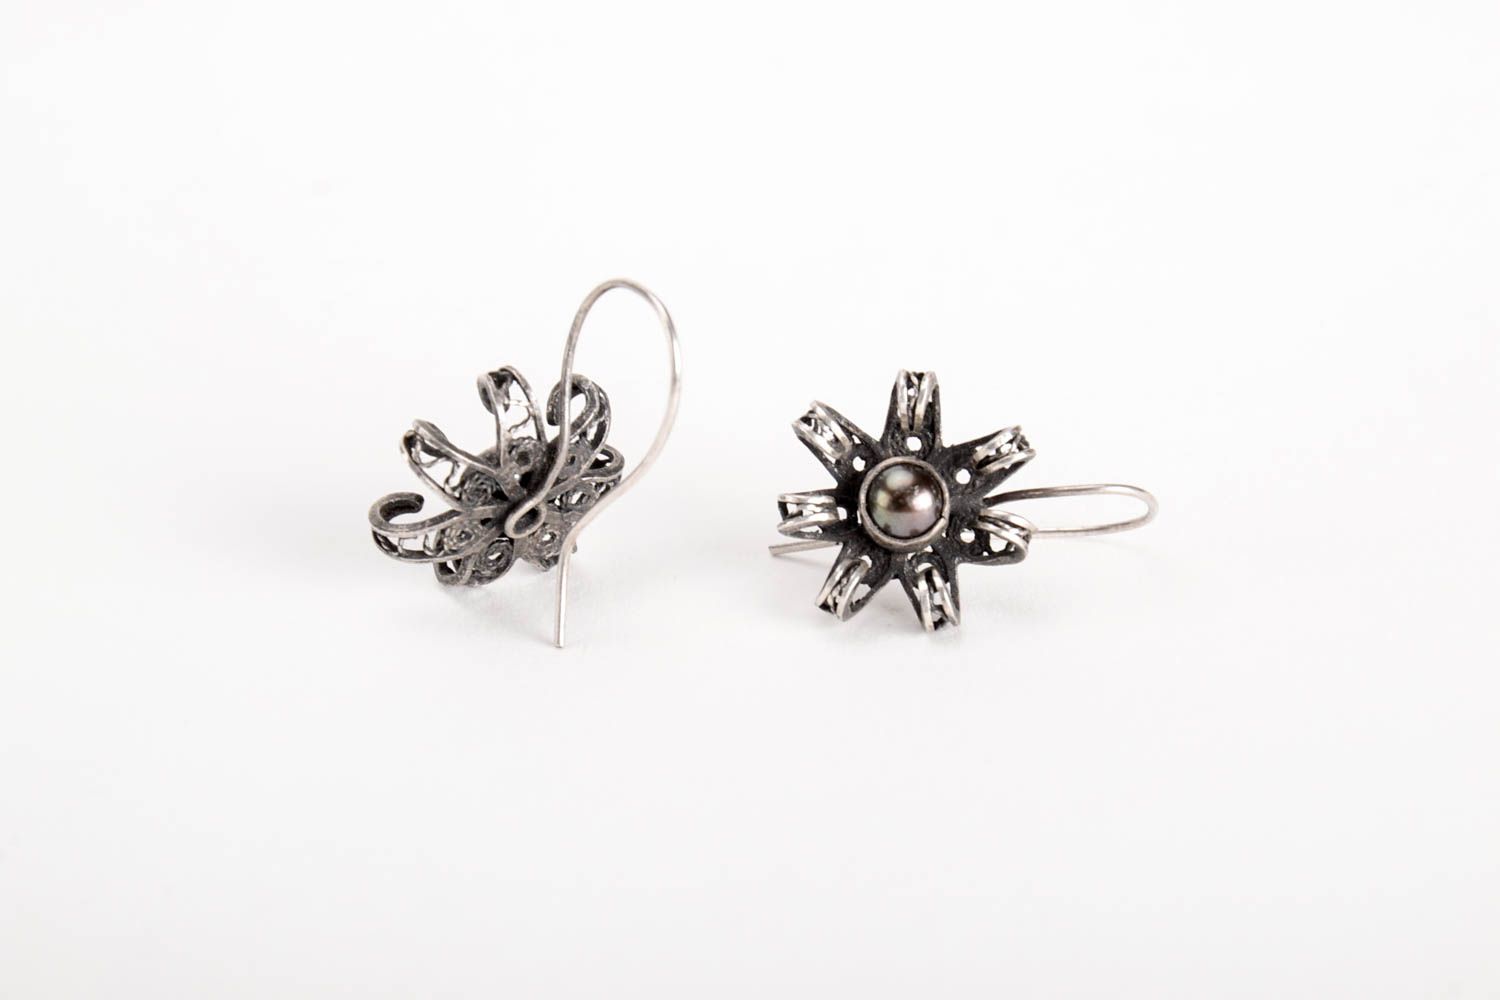 Handmade earrings designer earrings unusual silver earrings gift ideas photo 5